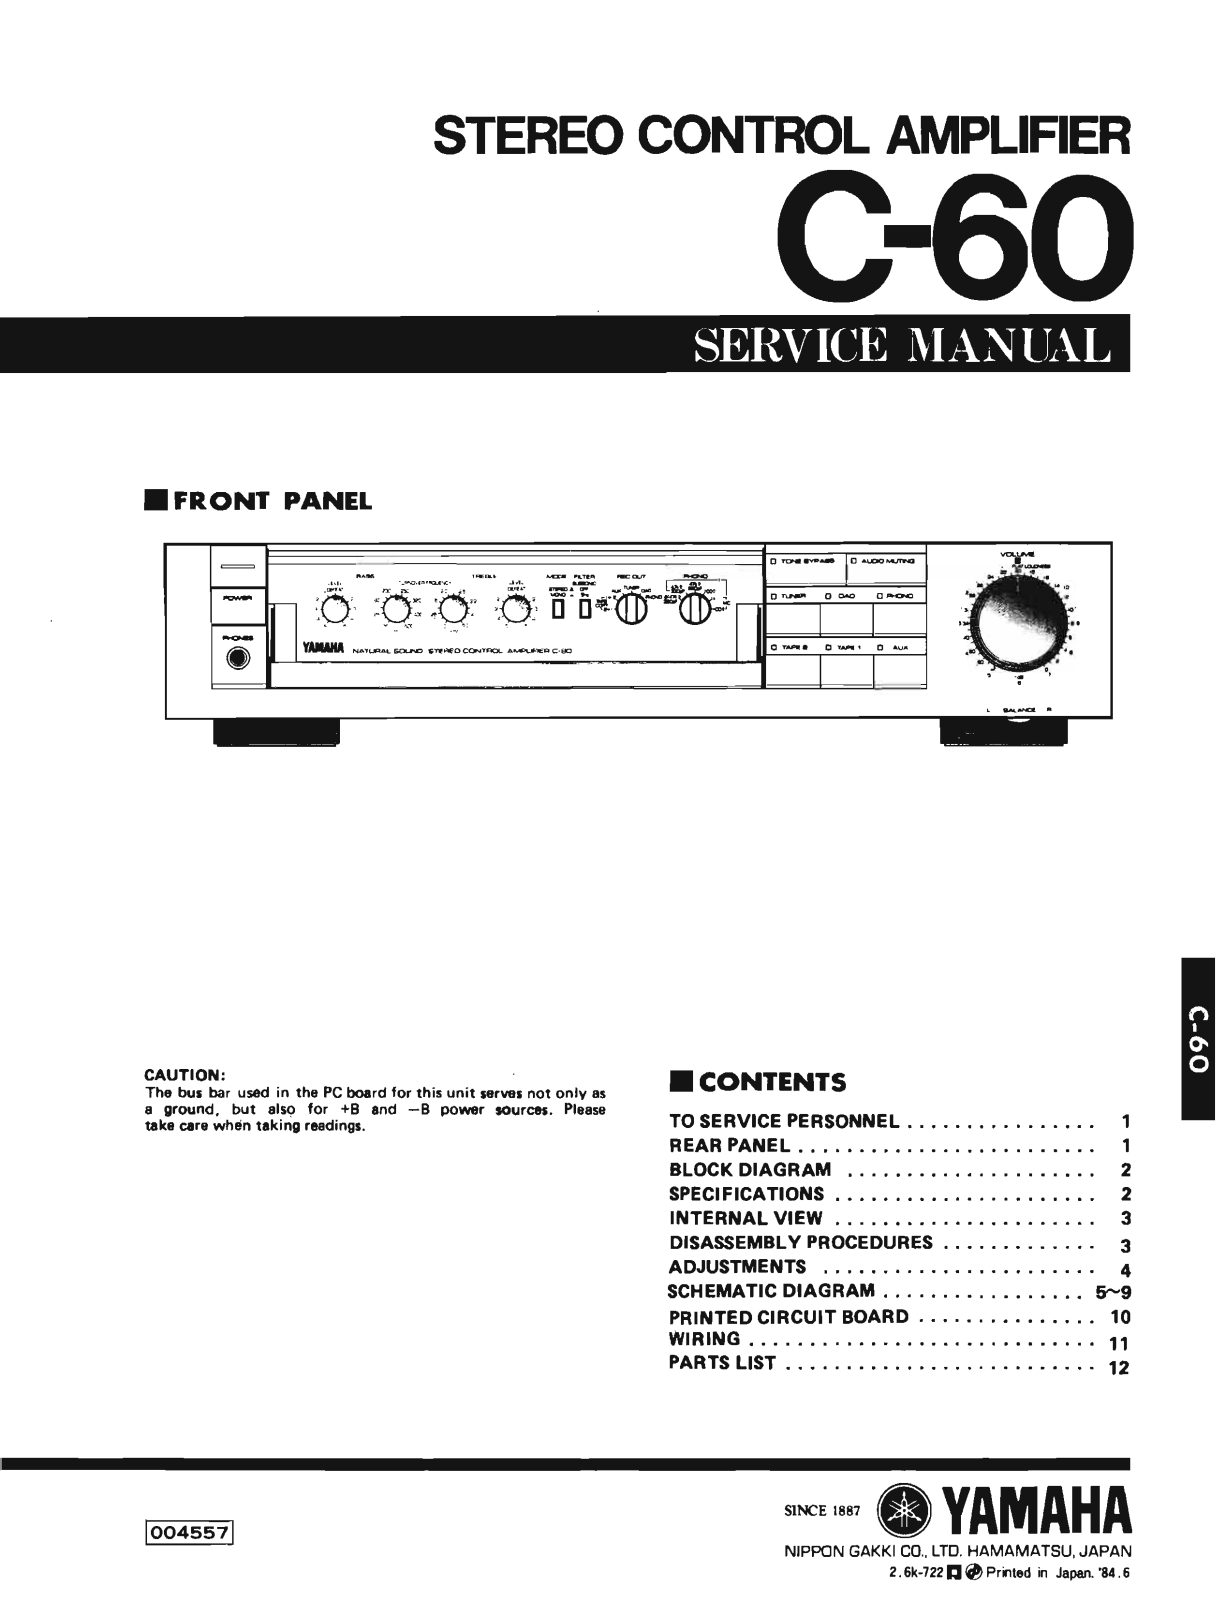 Yamaha C-60 Service Manual